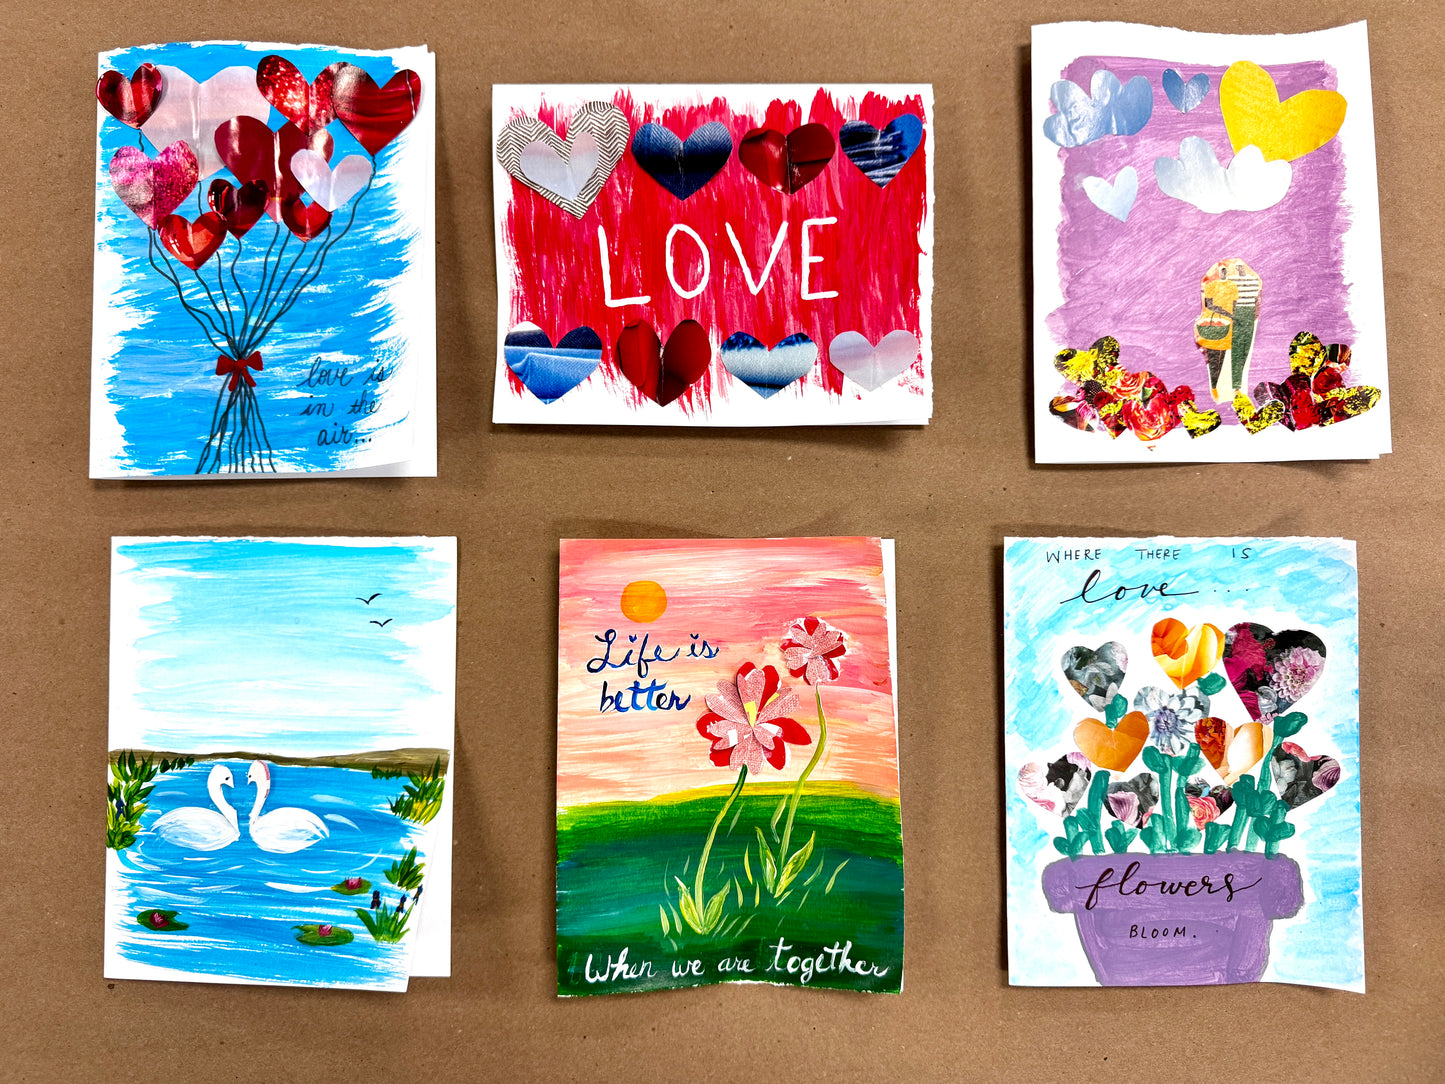 Wed, Feb 14th, 4-6P Kids Paint "Mixed Media Valentines" Houston Public Art Class